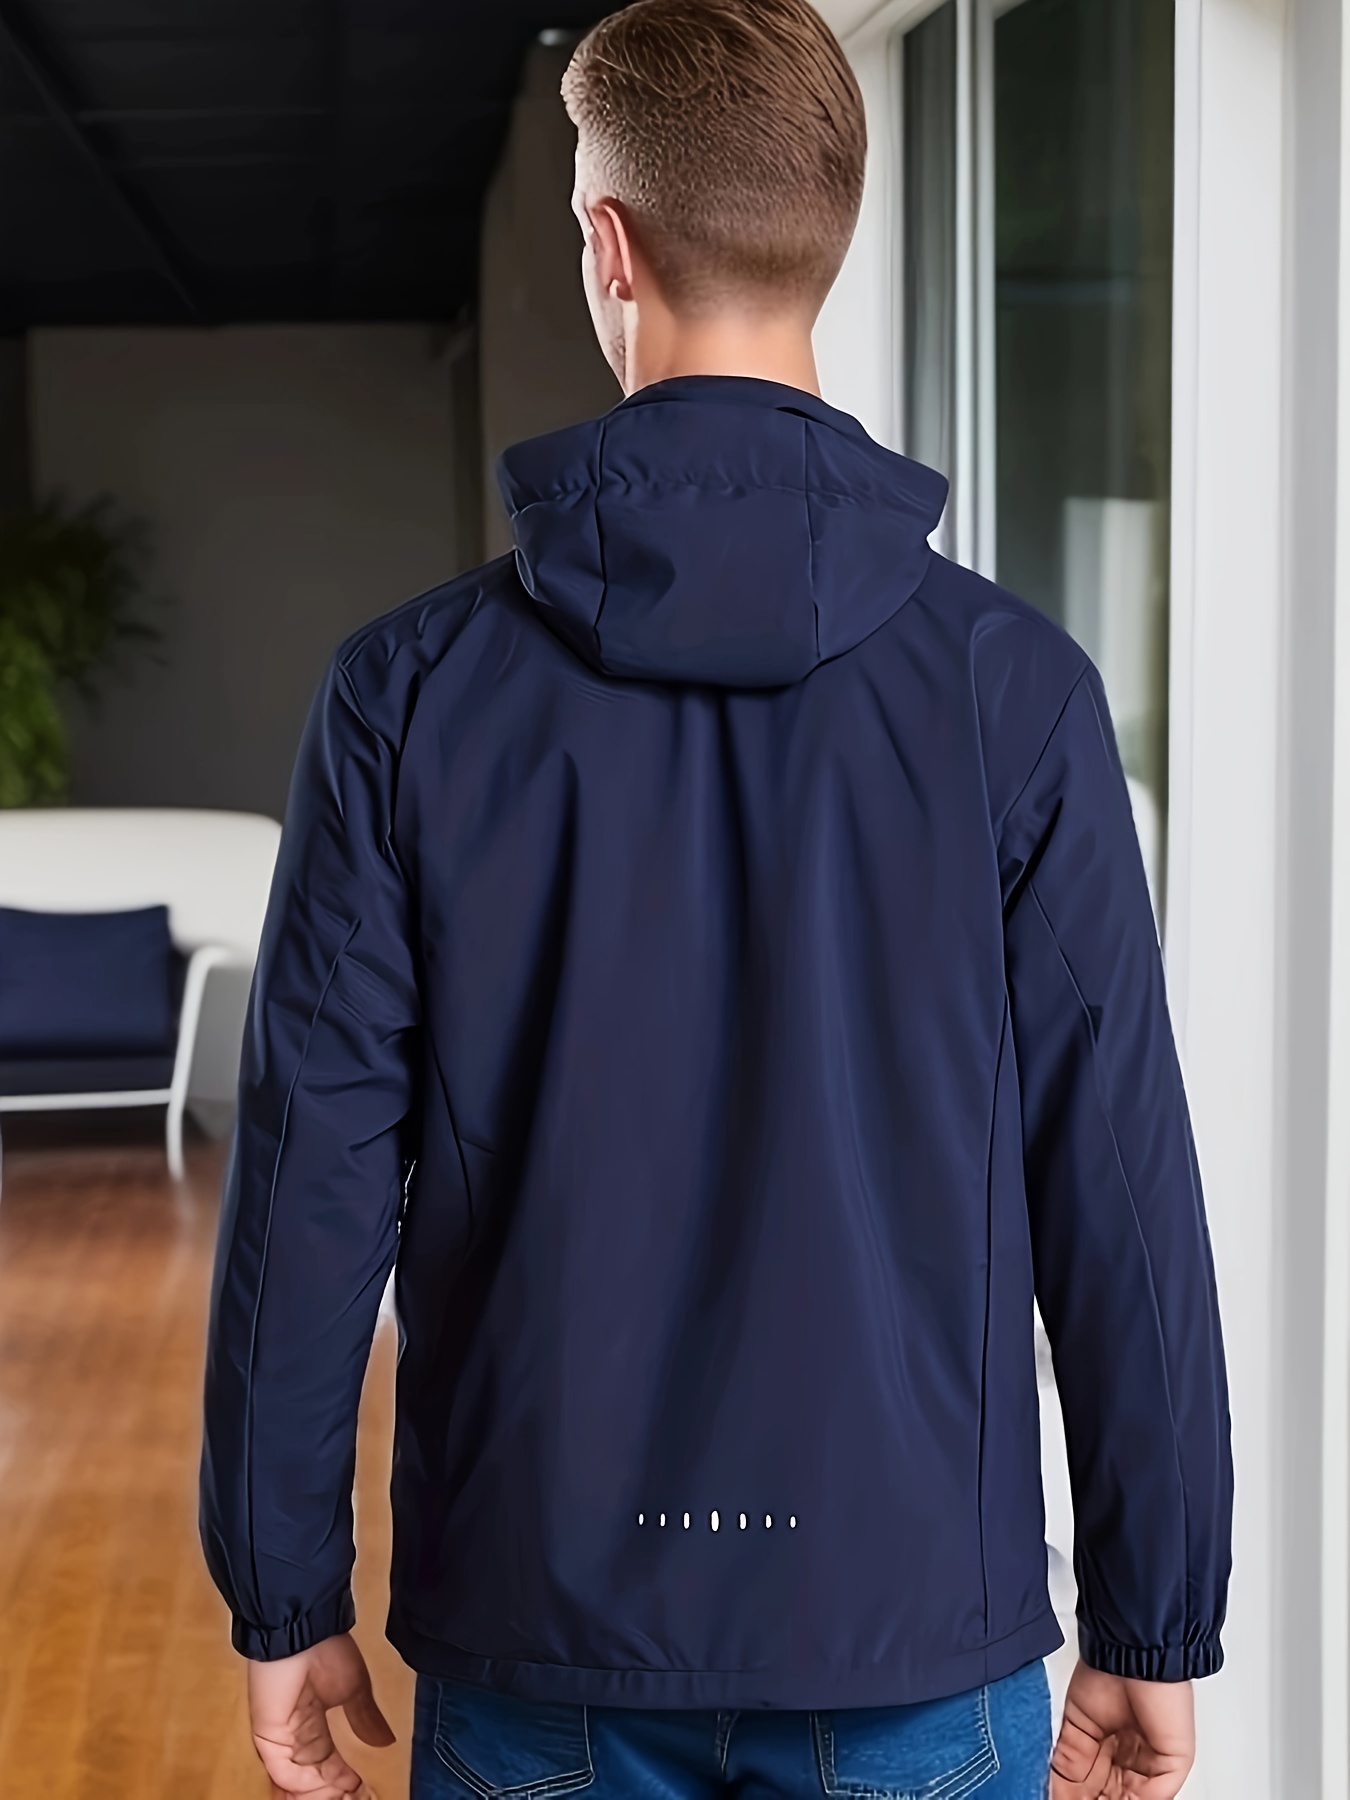 Men's Lightweight Waterproof Rain Jacket,Shell Hooded Outdoor Raincoat  Hiking Windbreake jacket